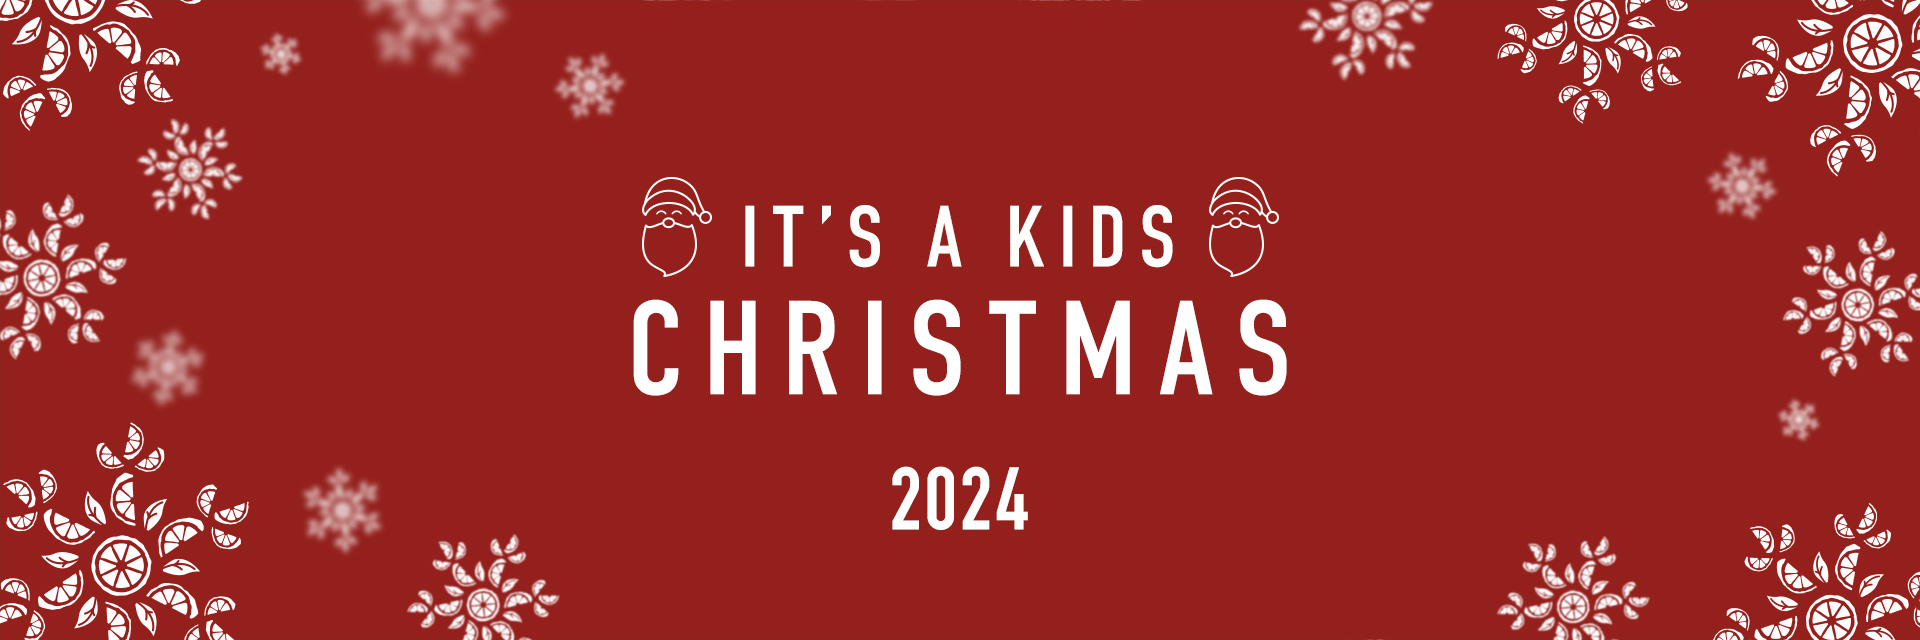 Kids Christmas Menu 2024 at The Durley Inn